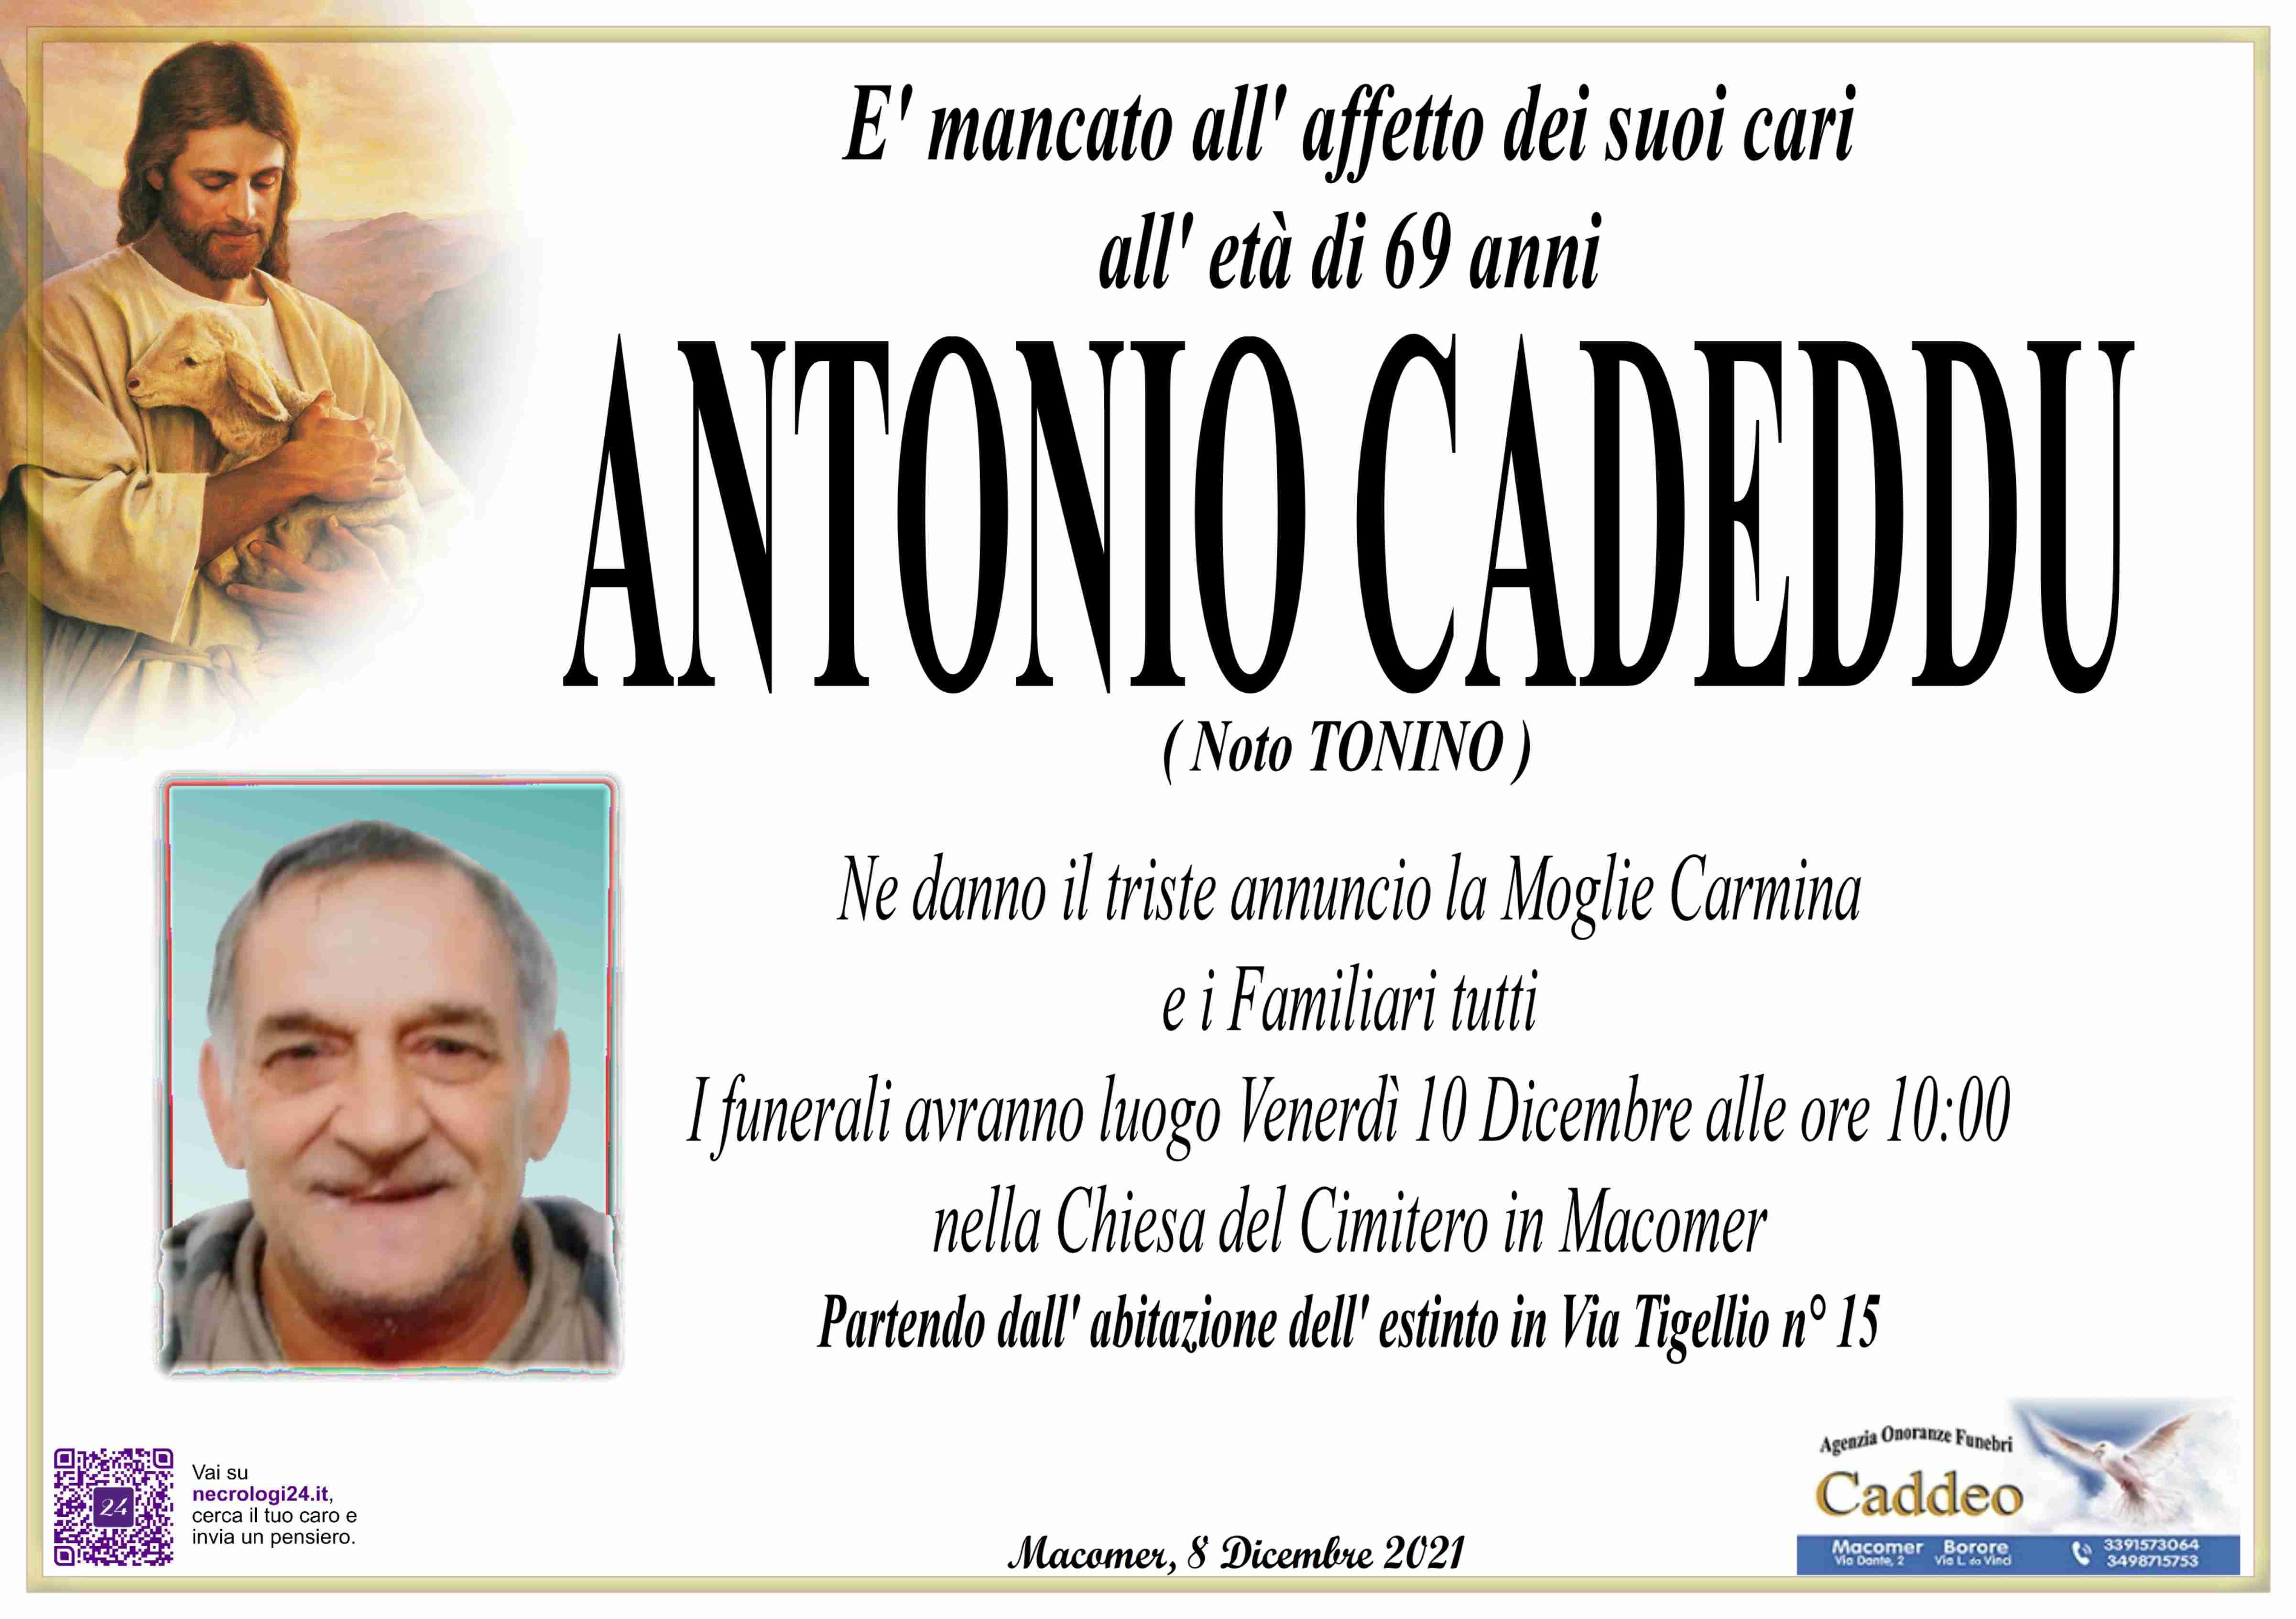 Antonio Cadeddu